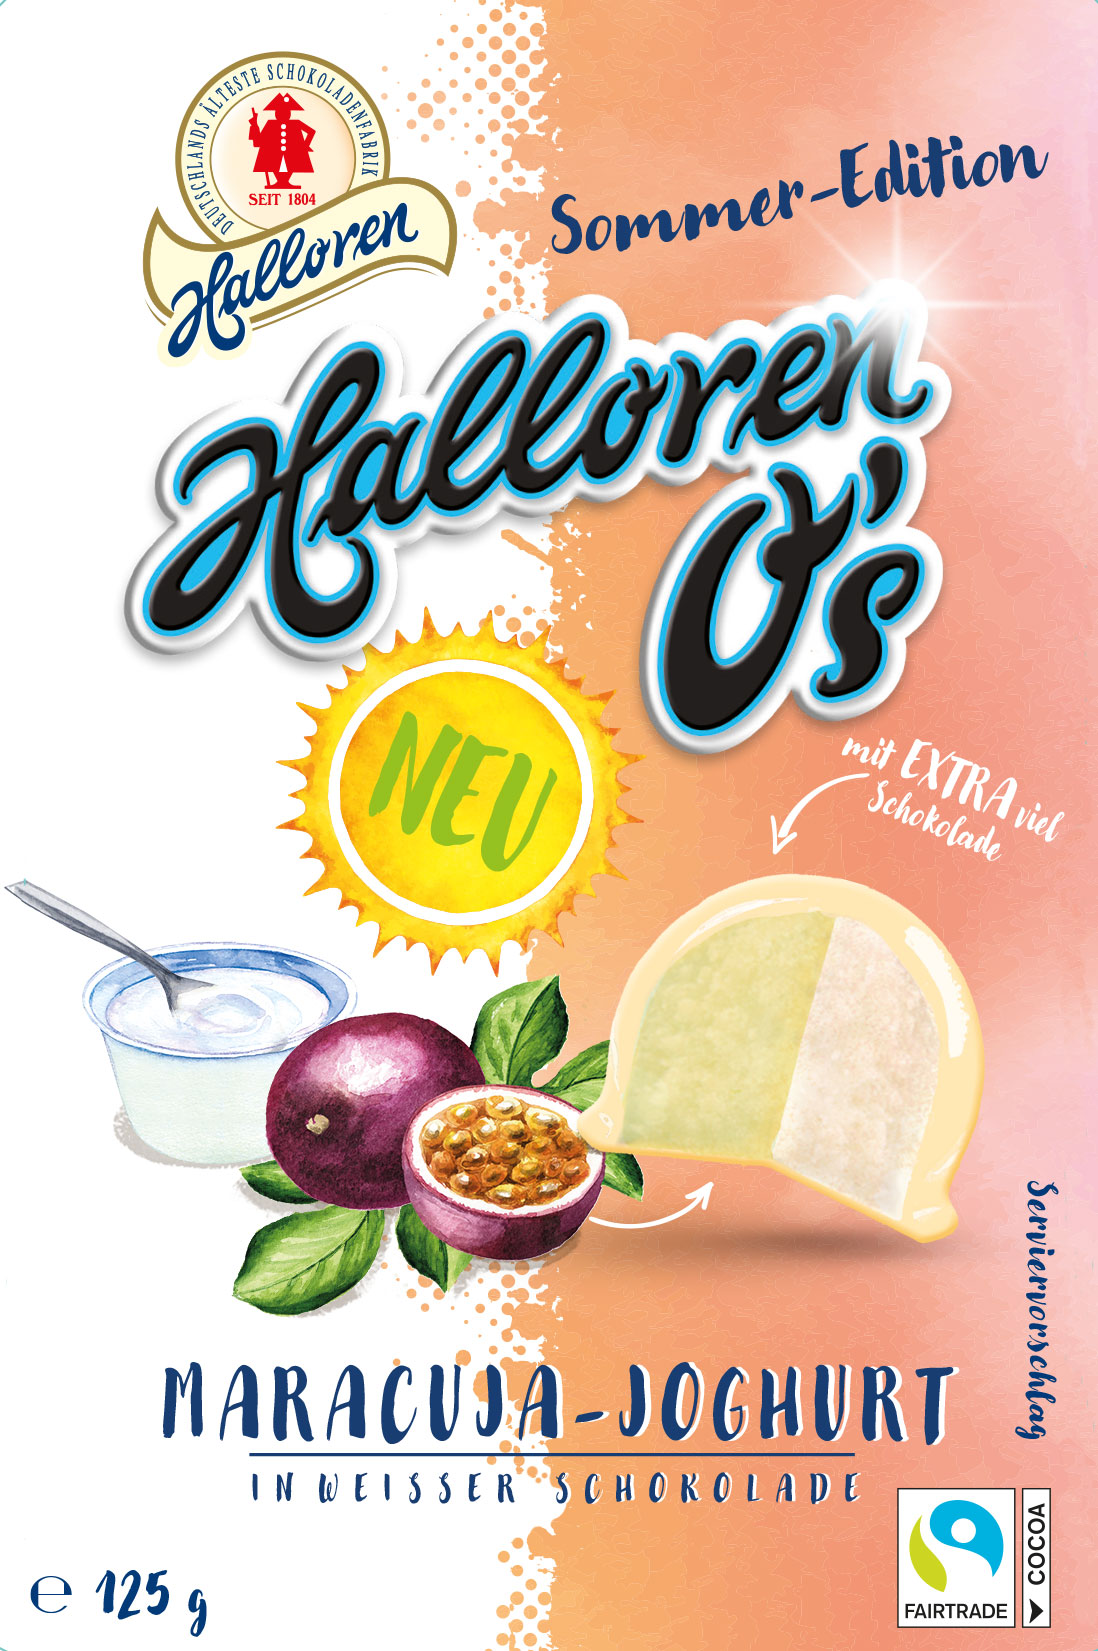 Halloren O's Maracuja&Joghurt